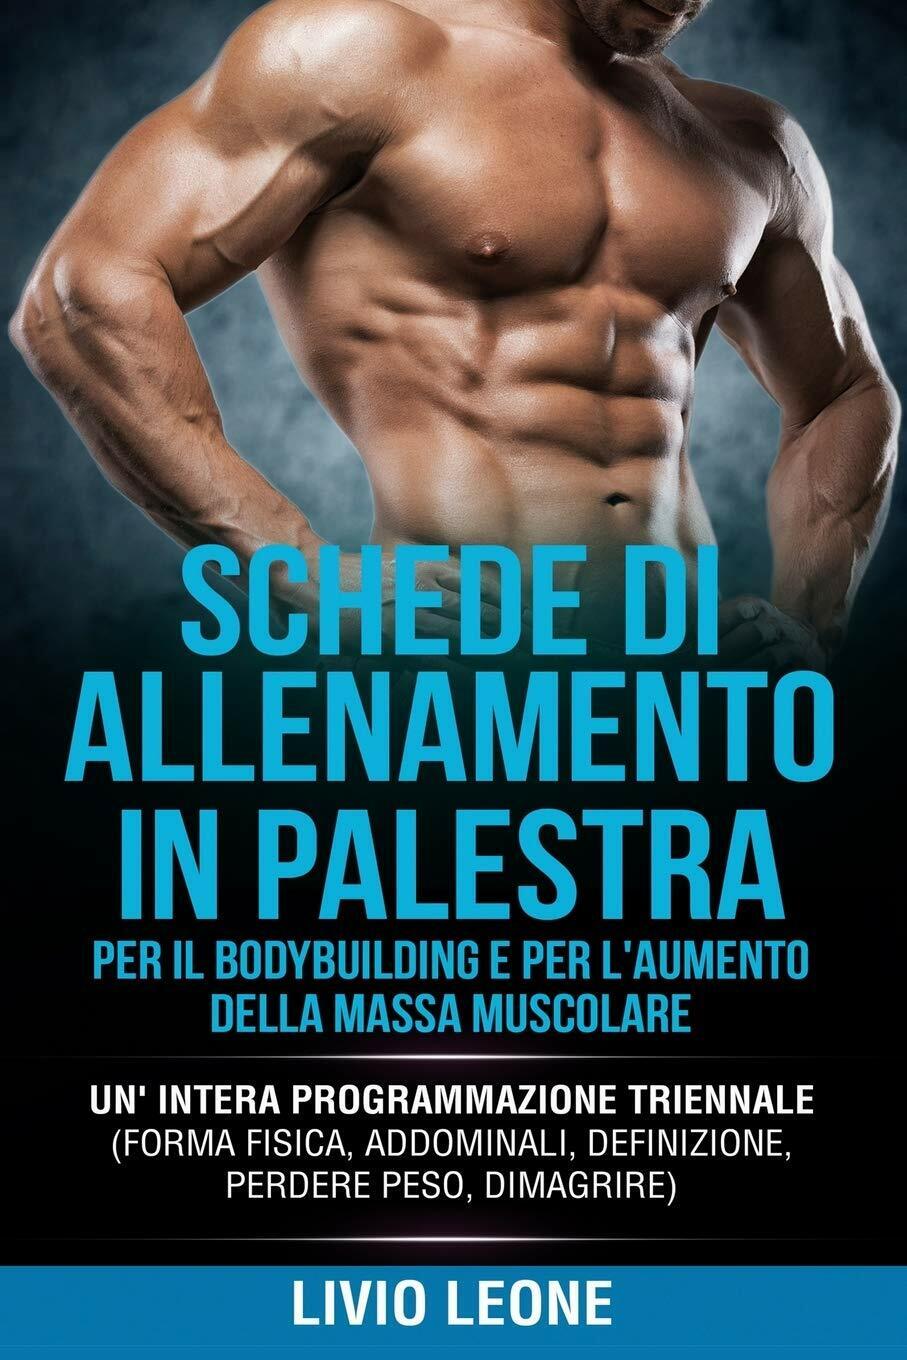 SCHEDE DI ALLENAMENTO IN PALESTRA - Livio Leone - Independently Published,2019